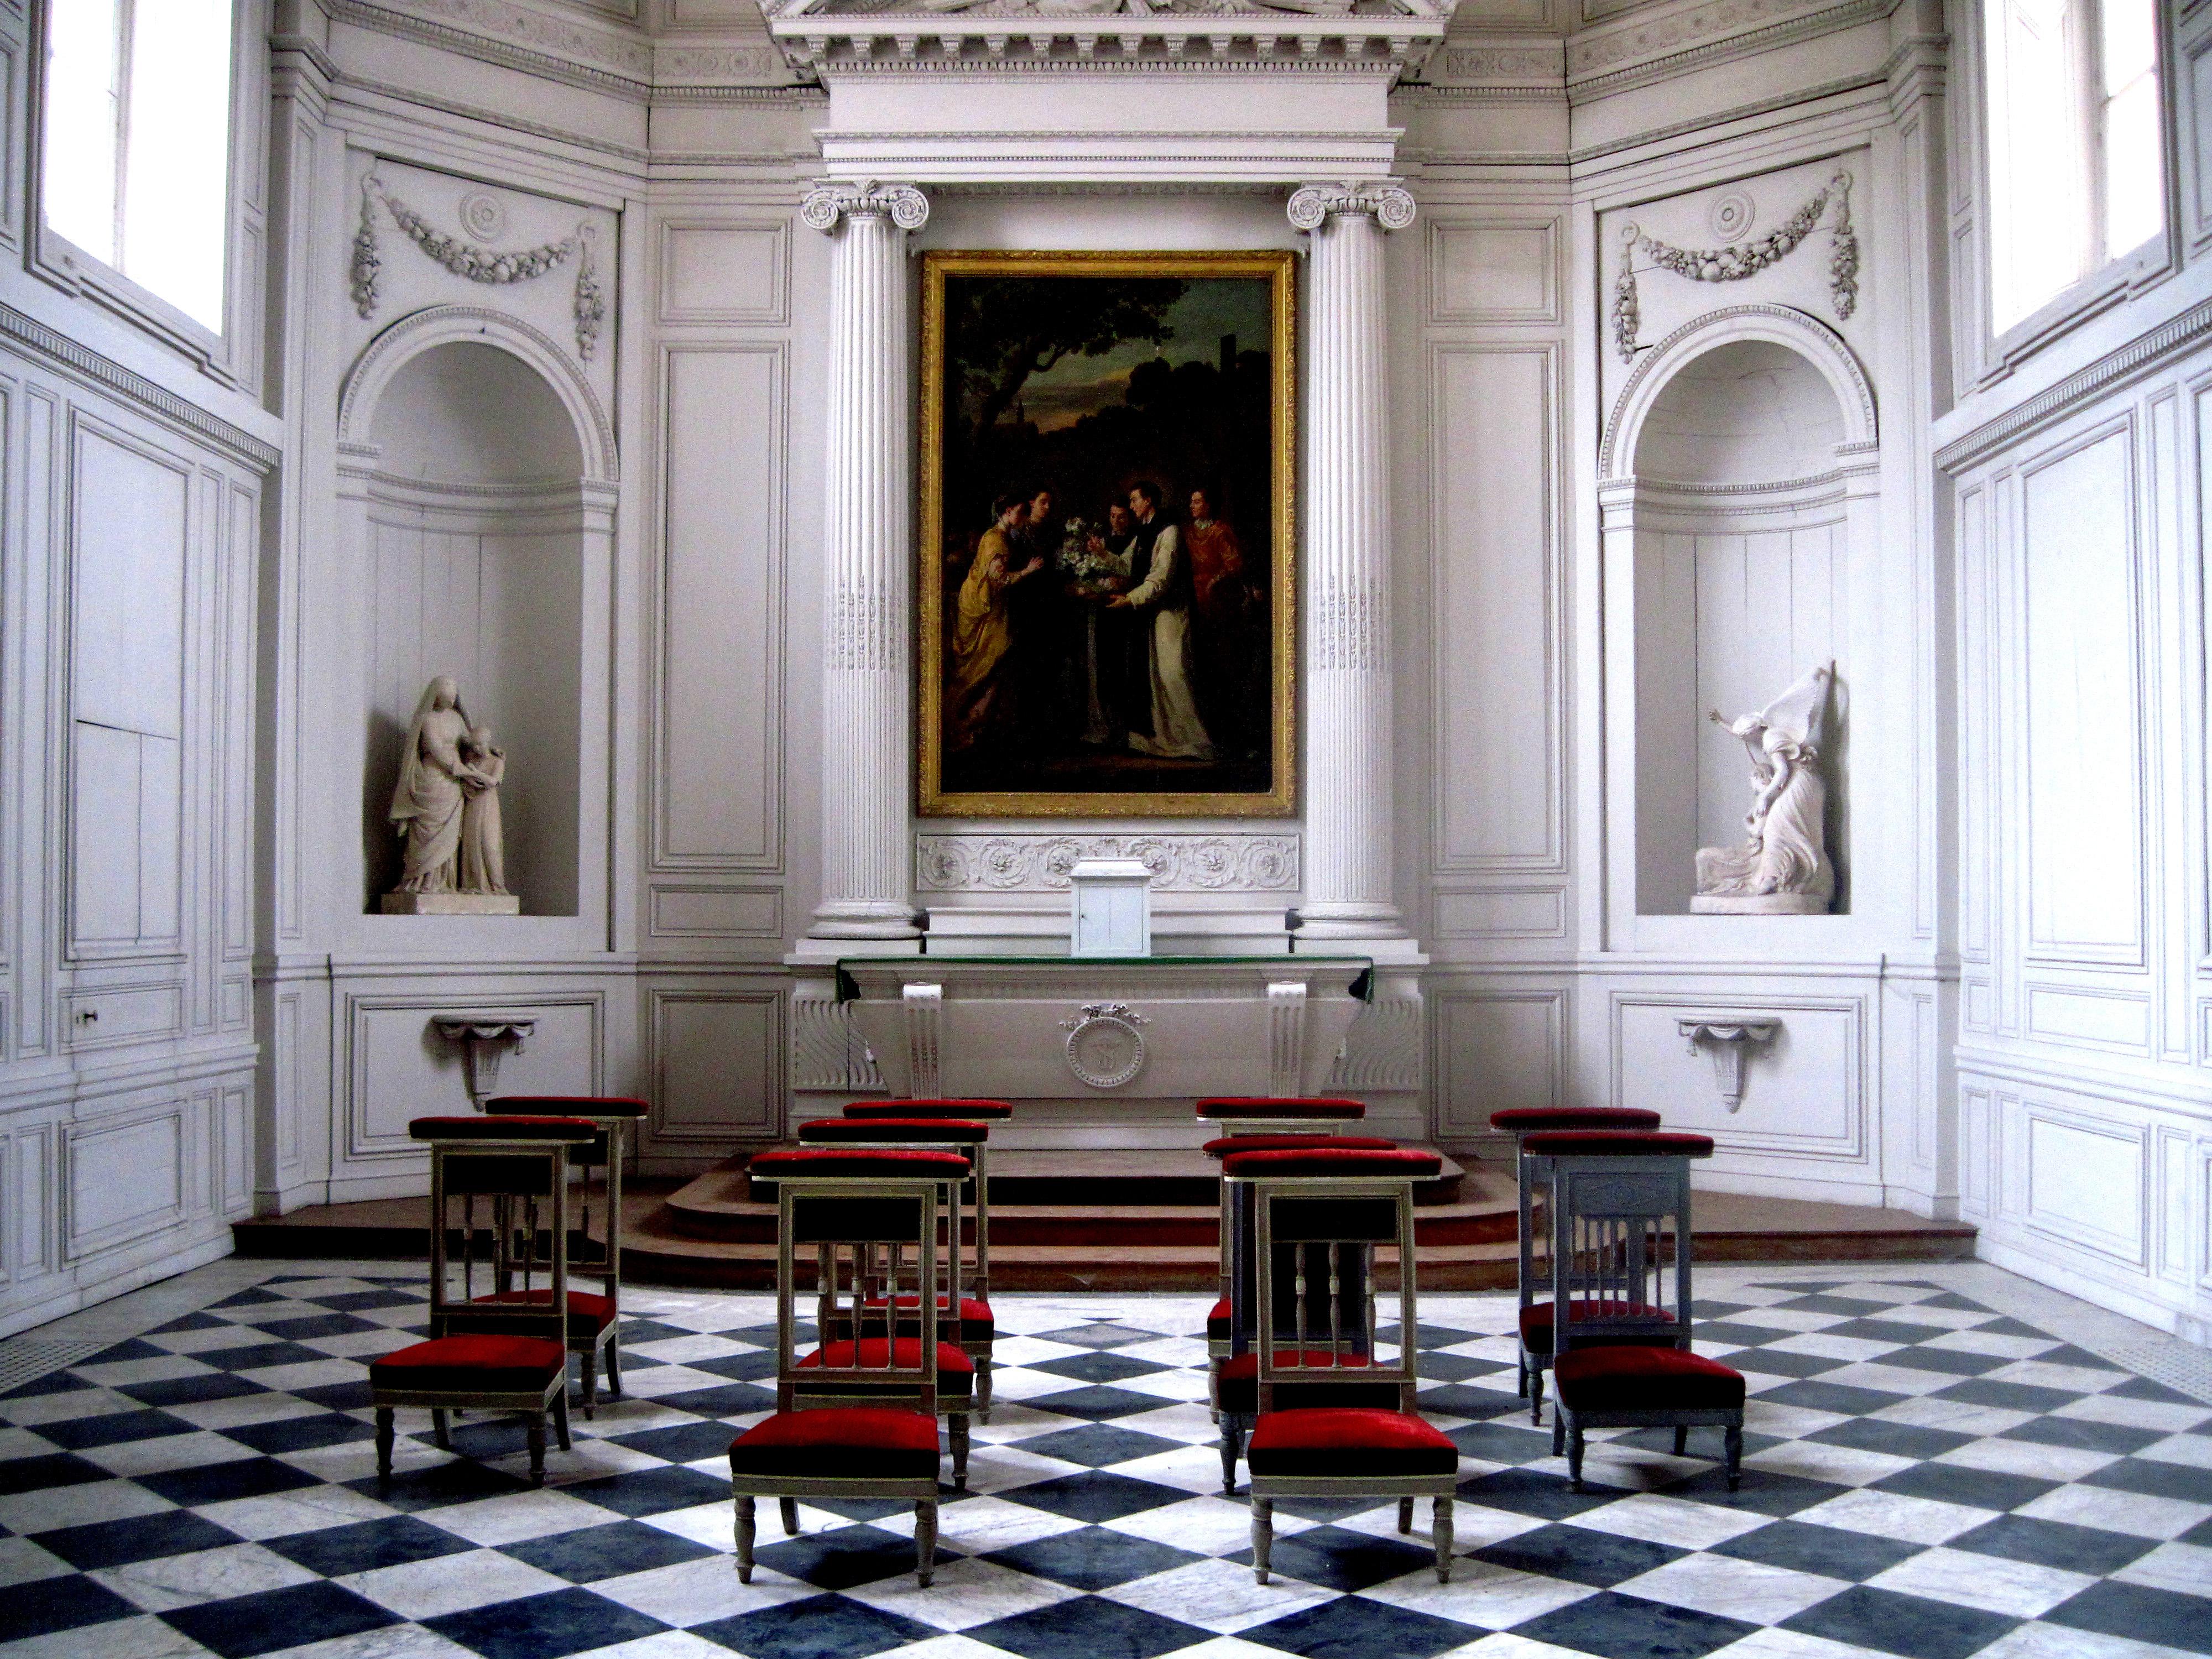 Chapel at Versailles